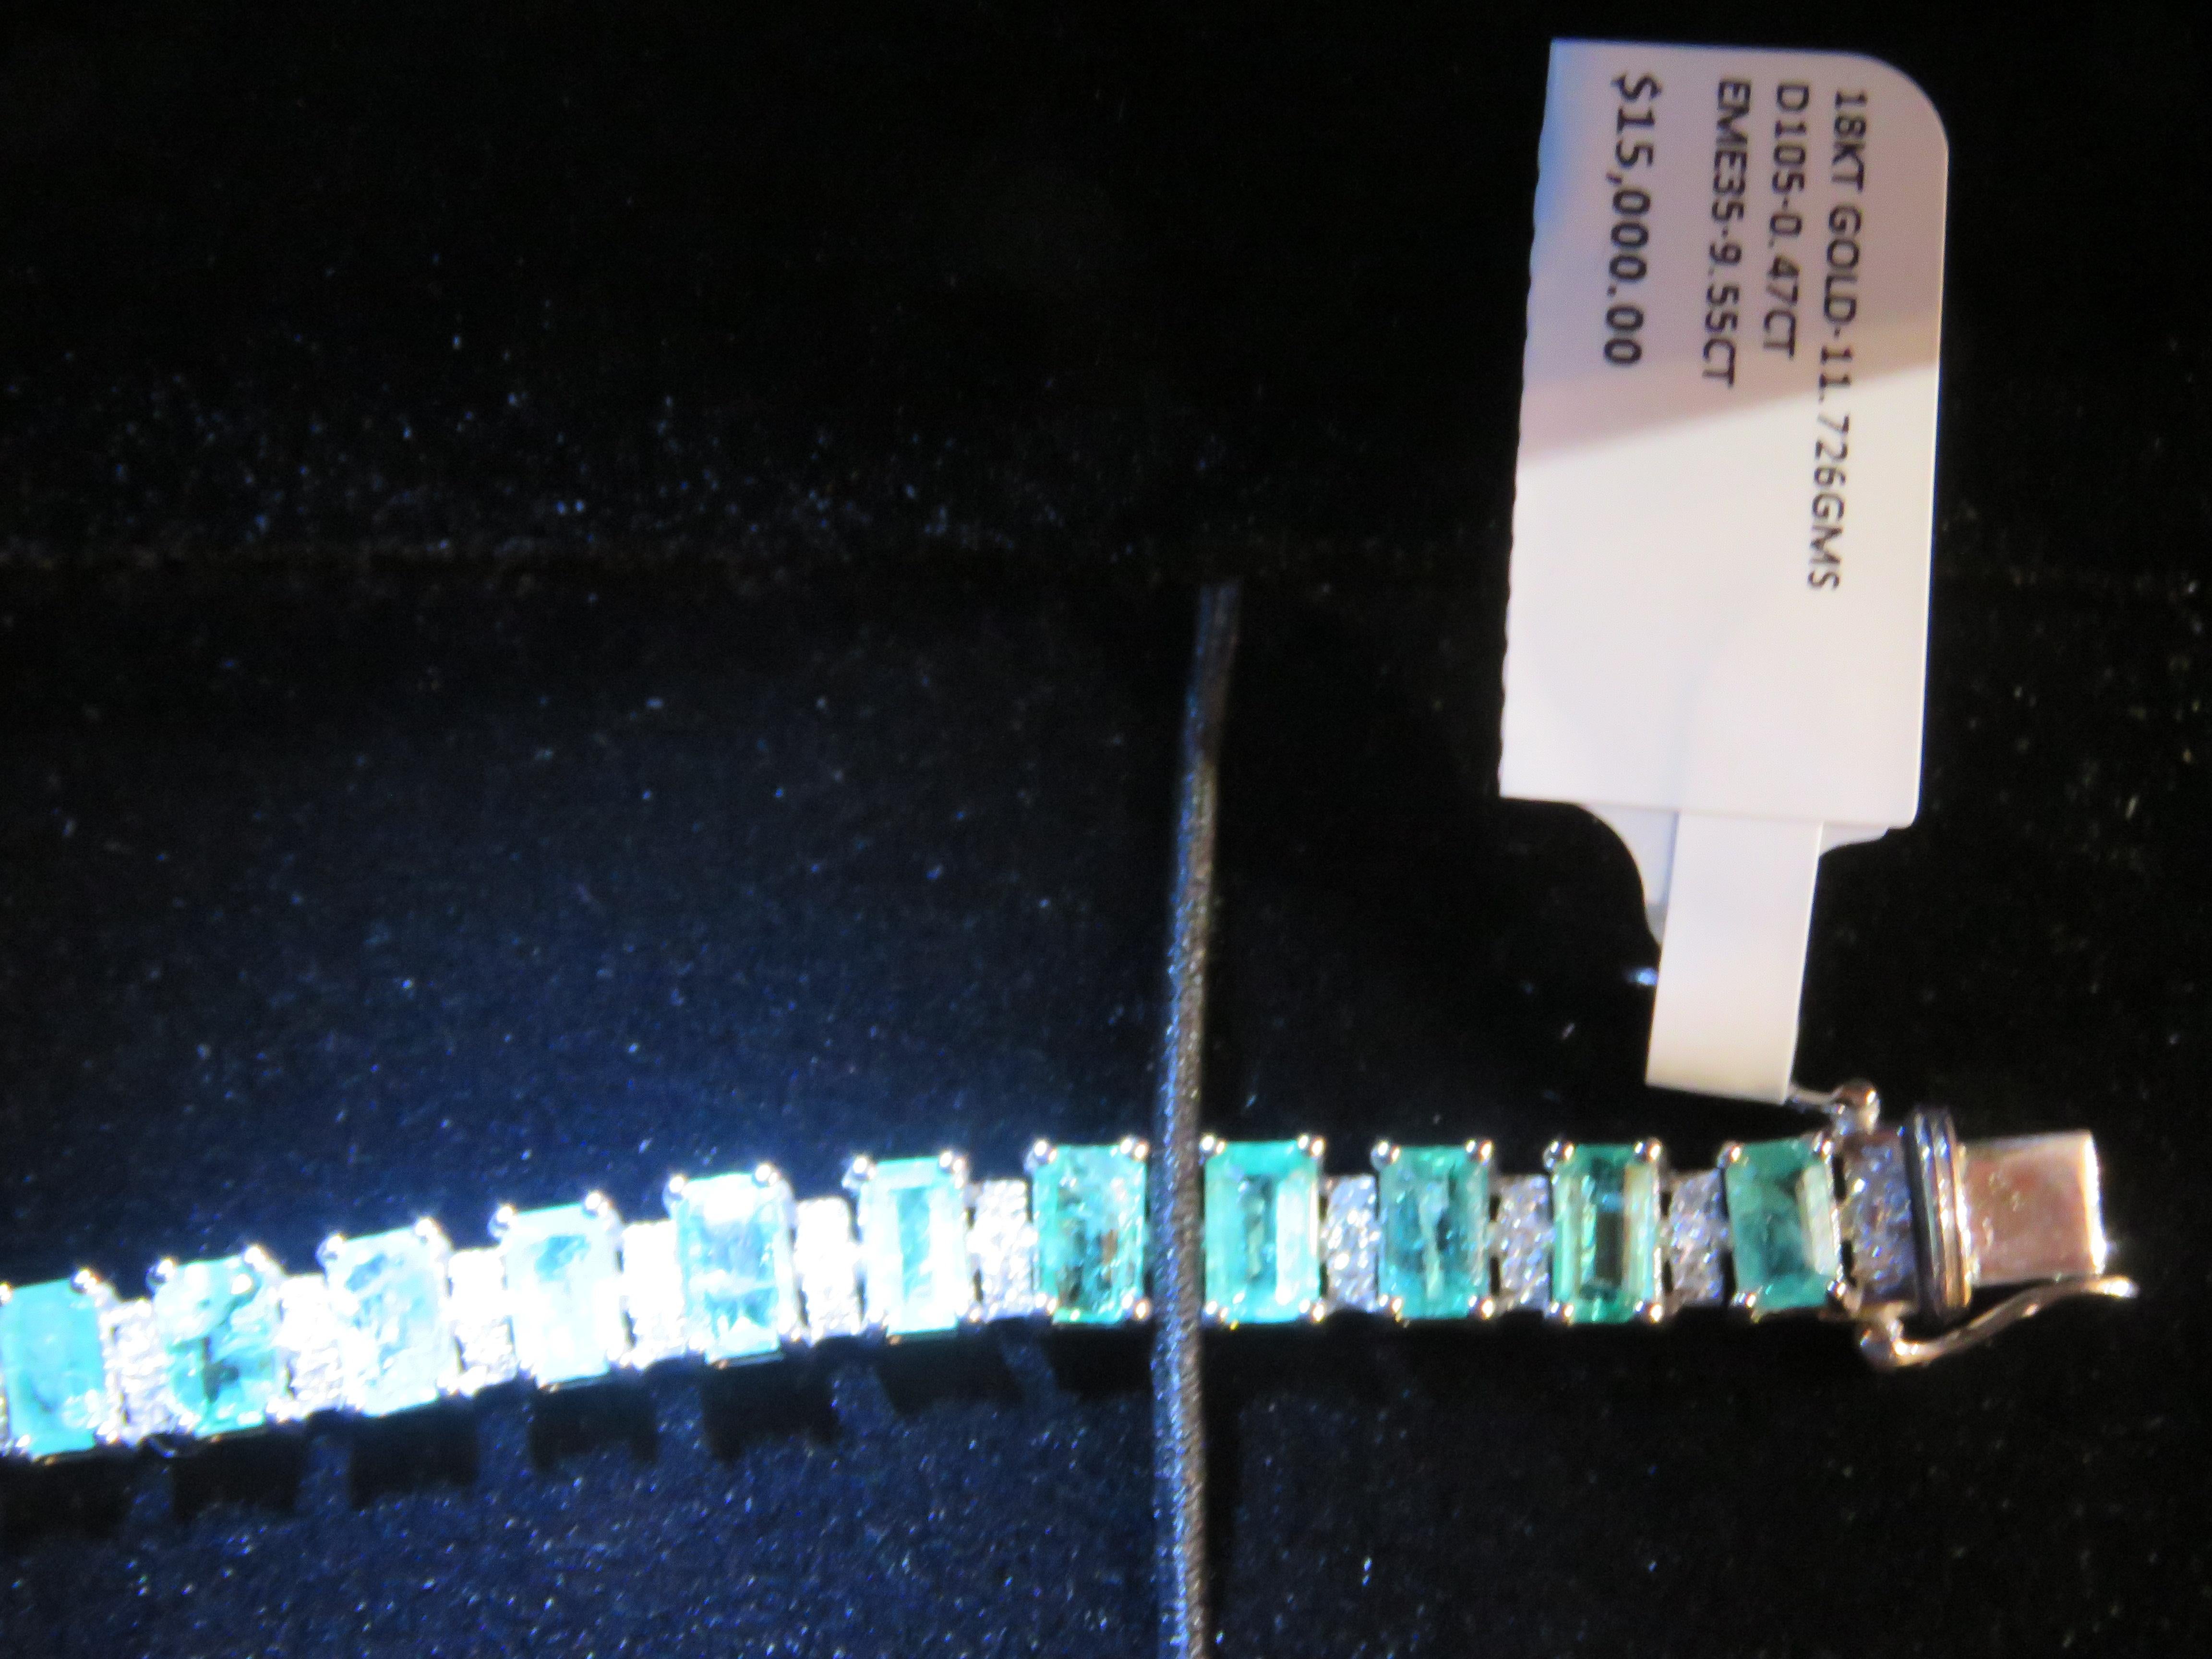 emerald and diamond bracelets